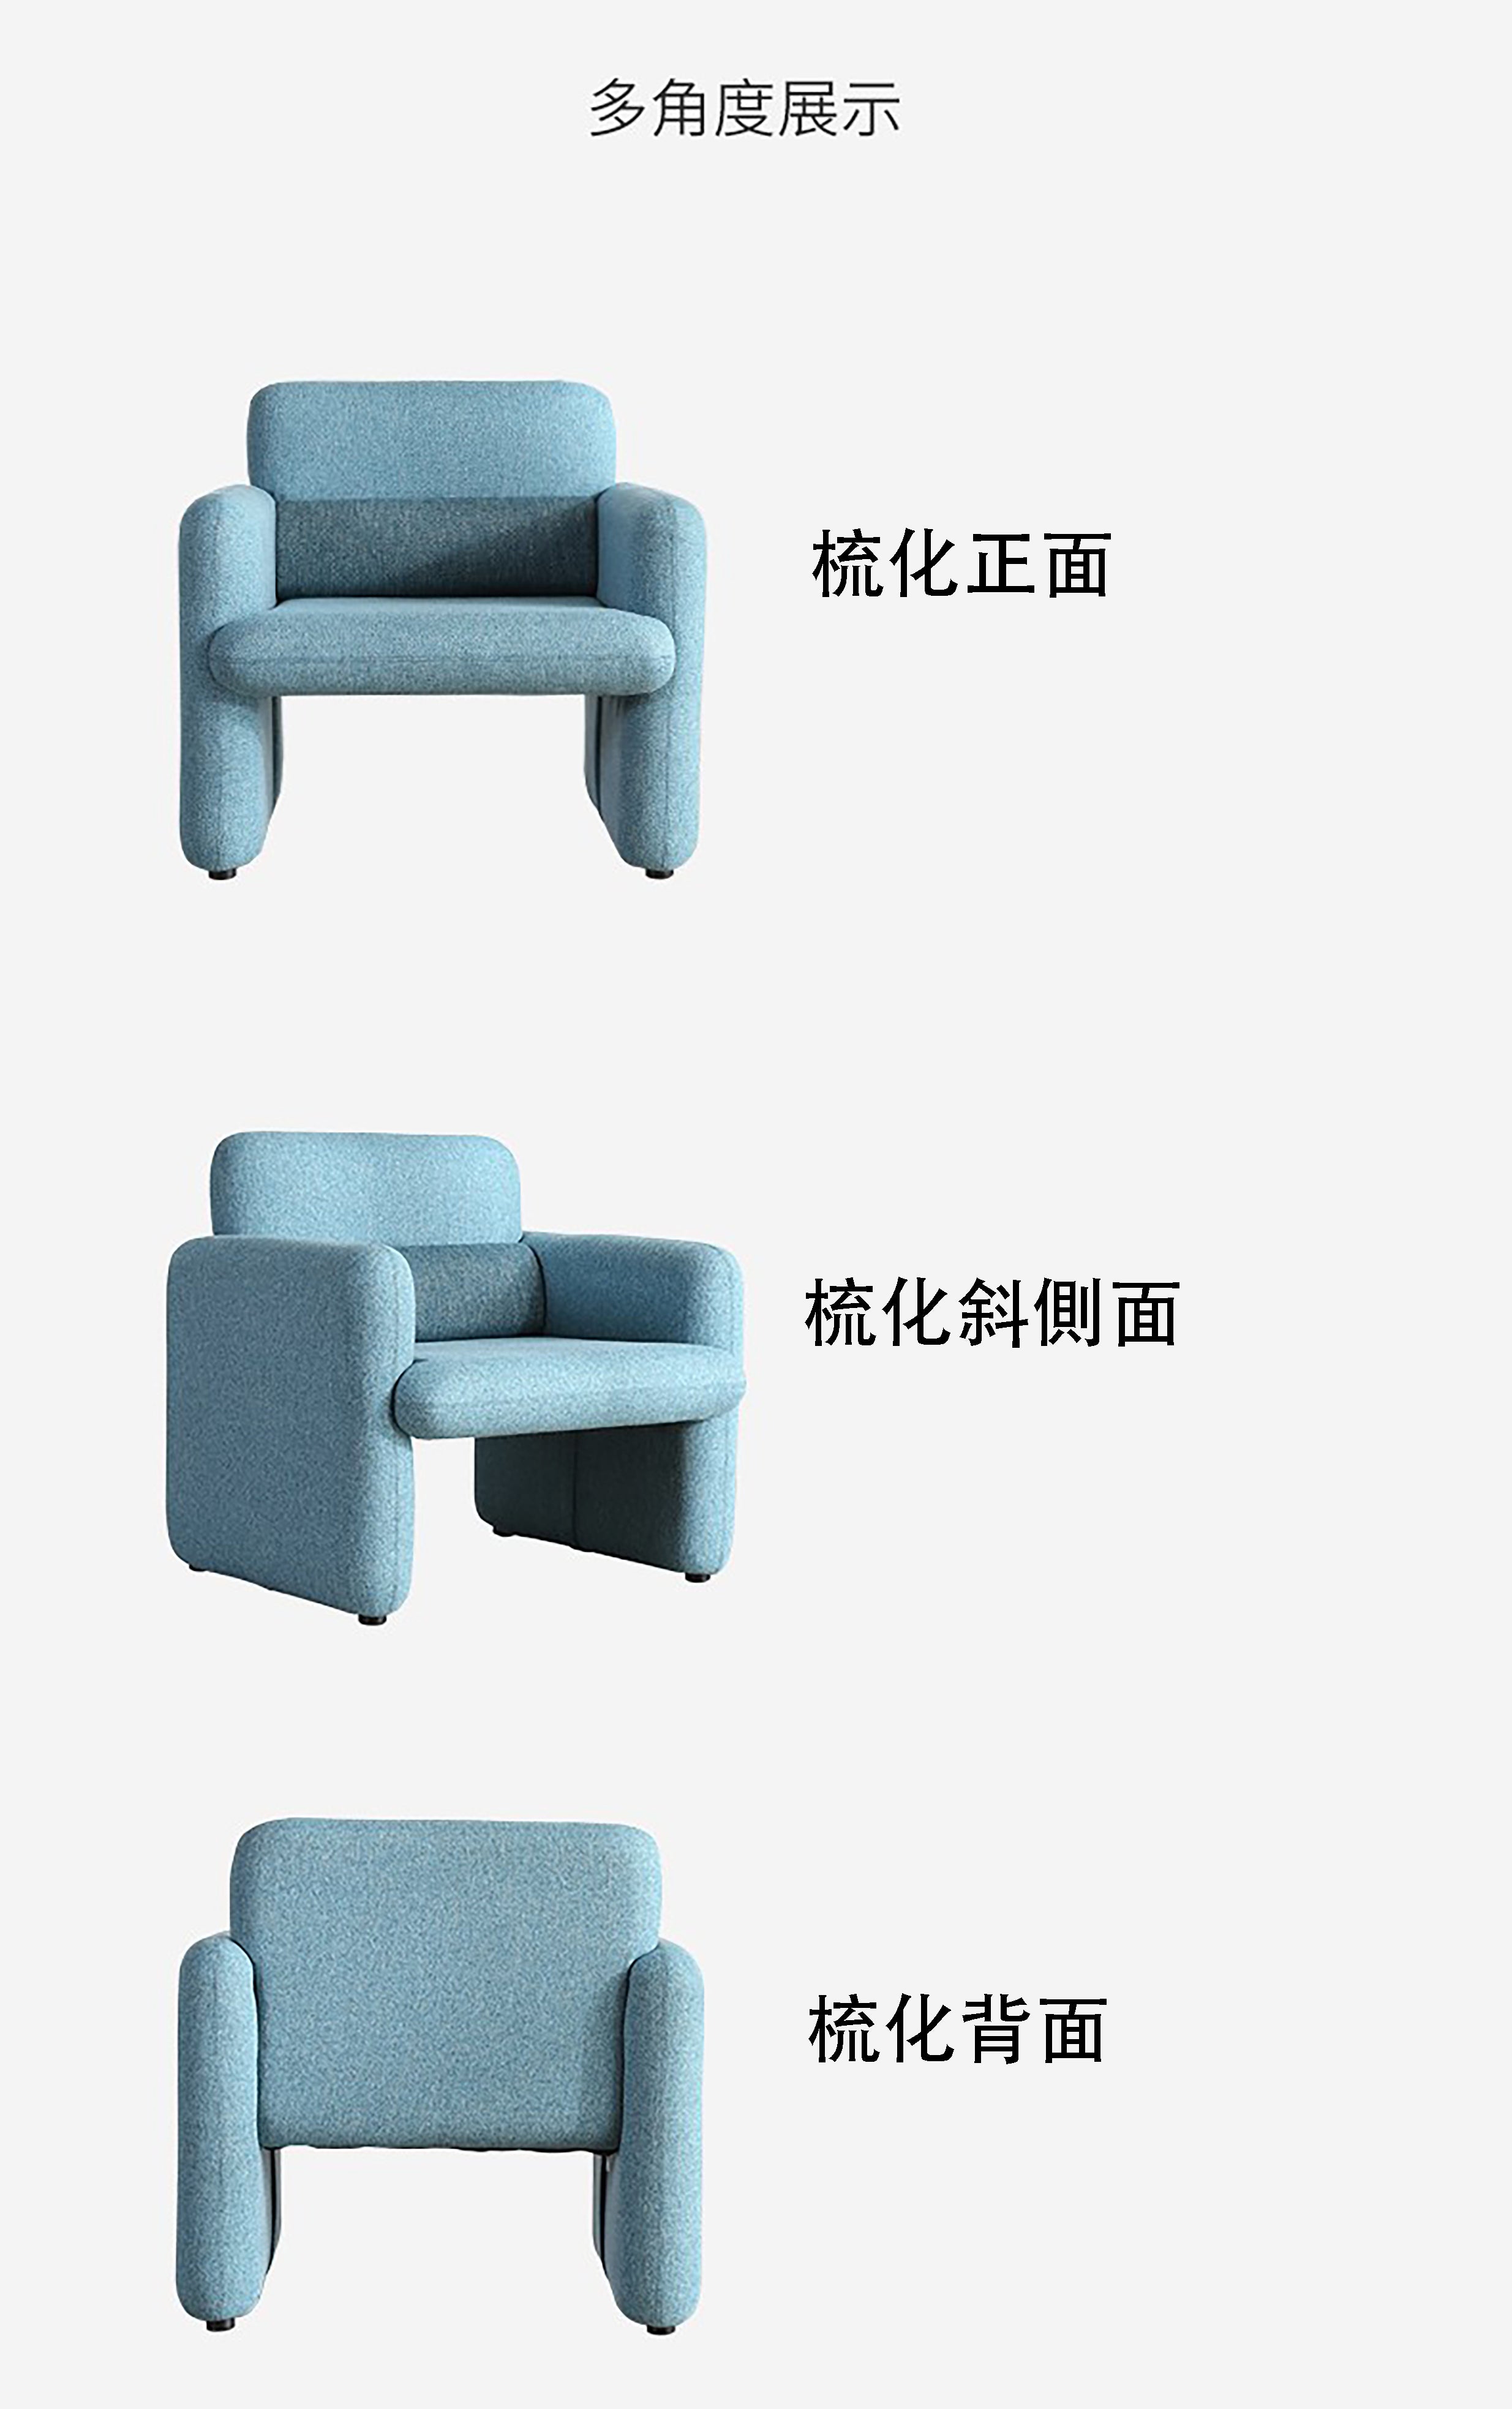 SOFA沙發 休閒家具 Simple Modern Sofa